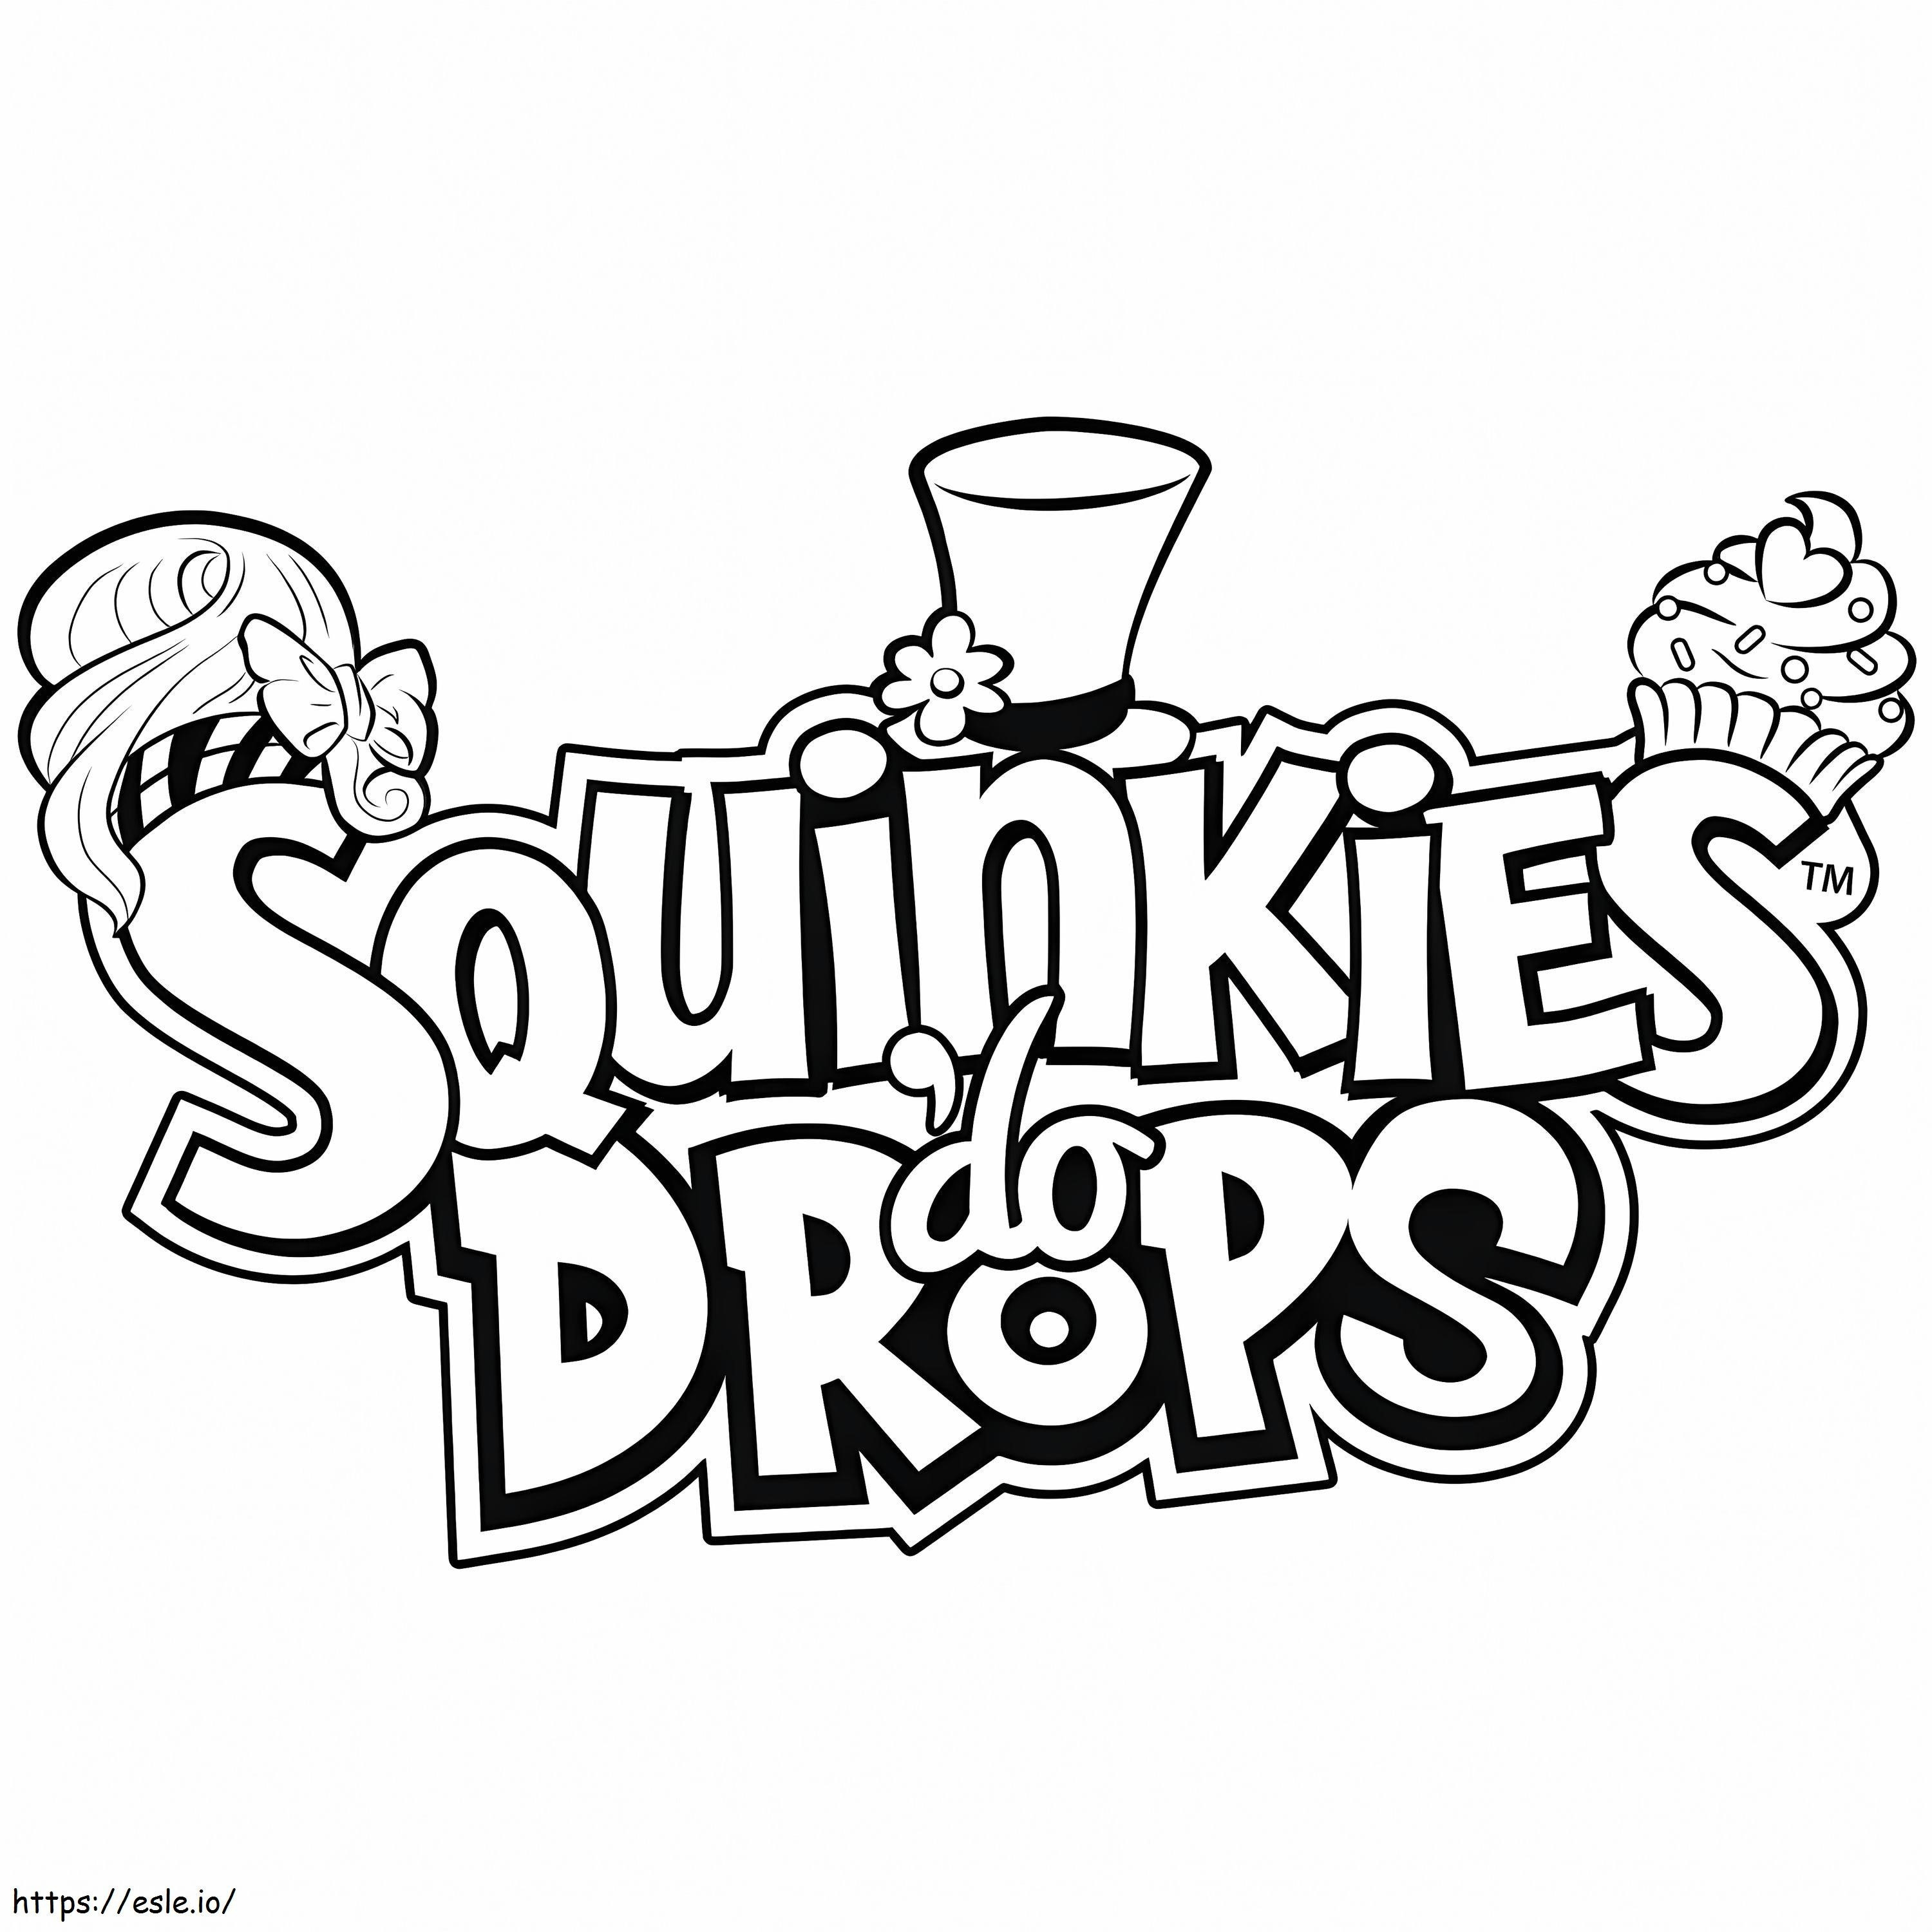 Squinkies Season 1 coloring page